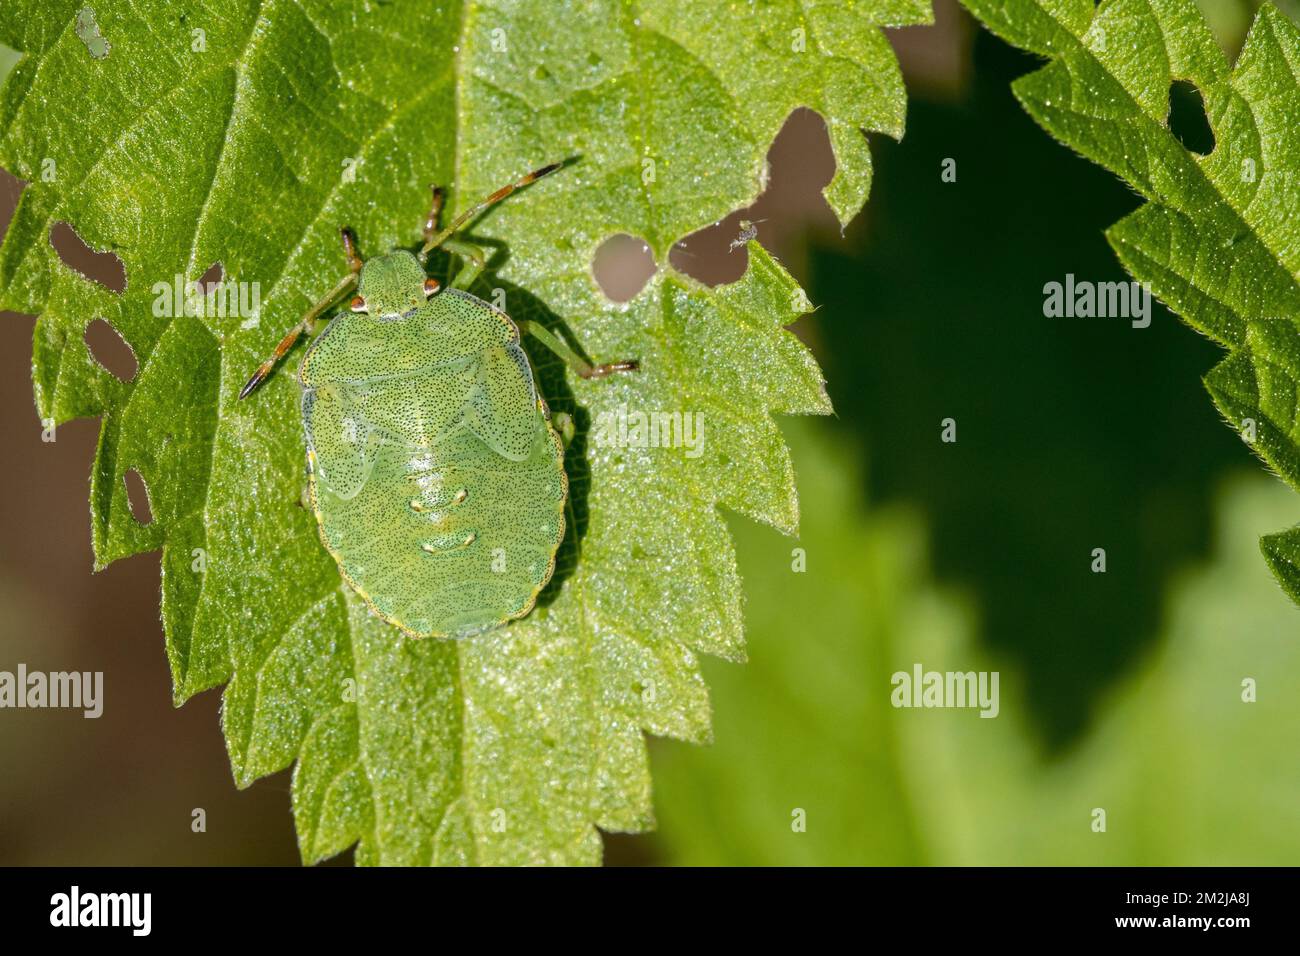 Green shield bug (Palomena prasina) nymph on leaf showing camouflage colours | Punaise verte (Palomena prasina) nymphe / larve 01/09/2018 Stock Photo